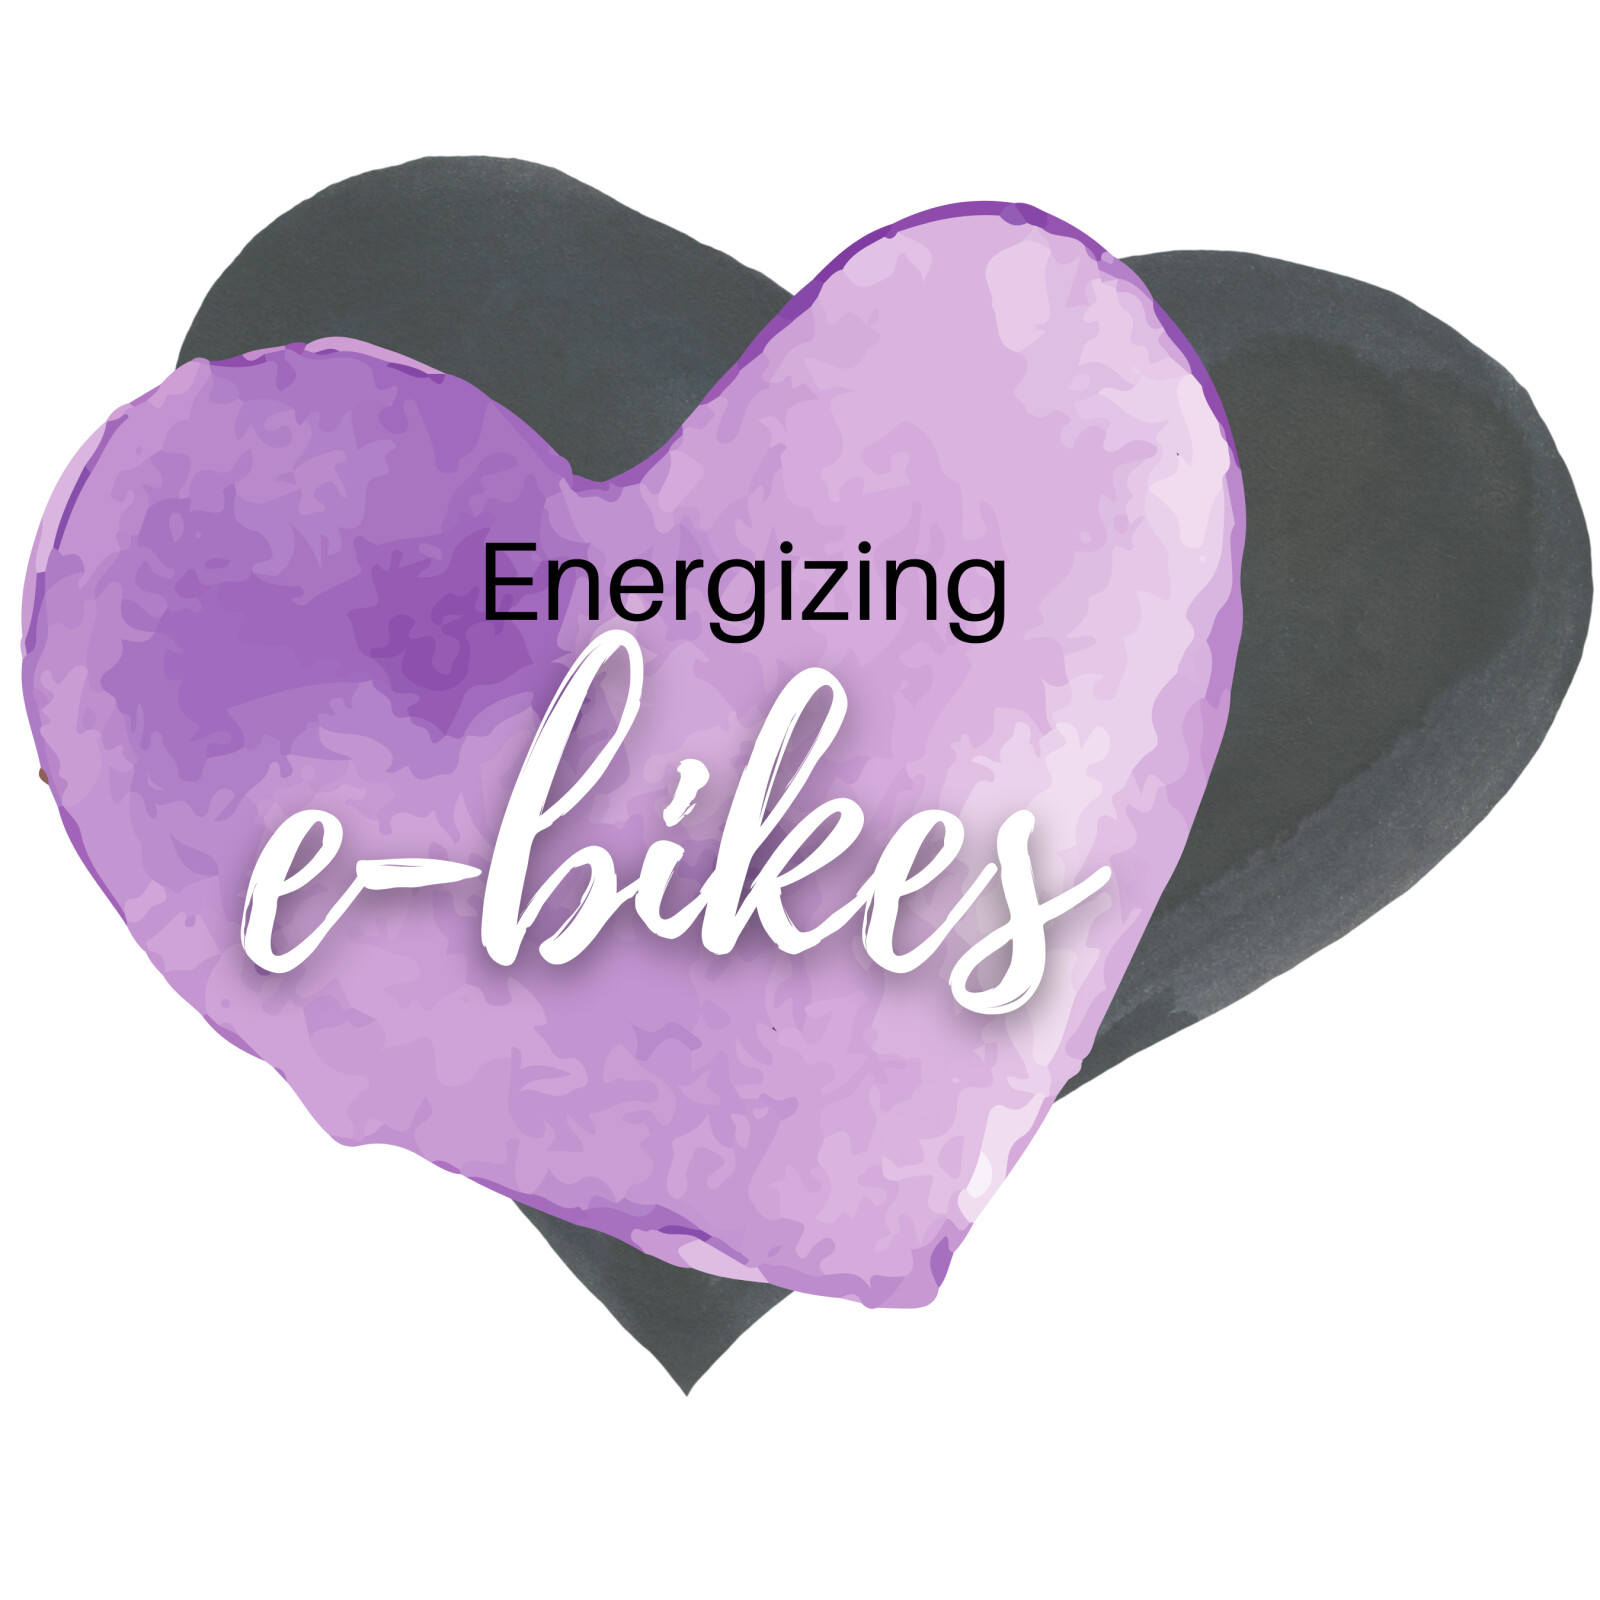 Energizing E-Bikes!